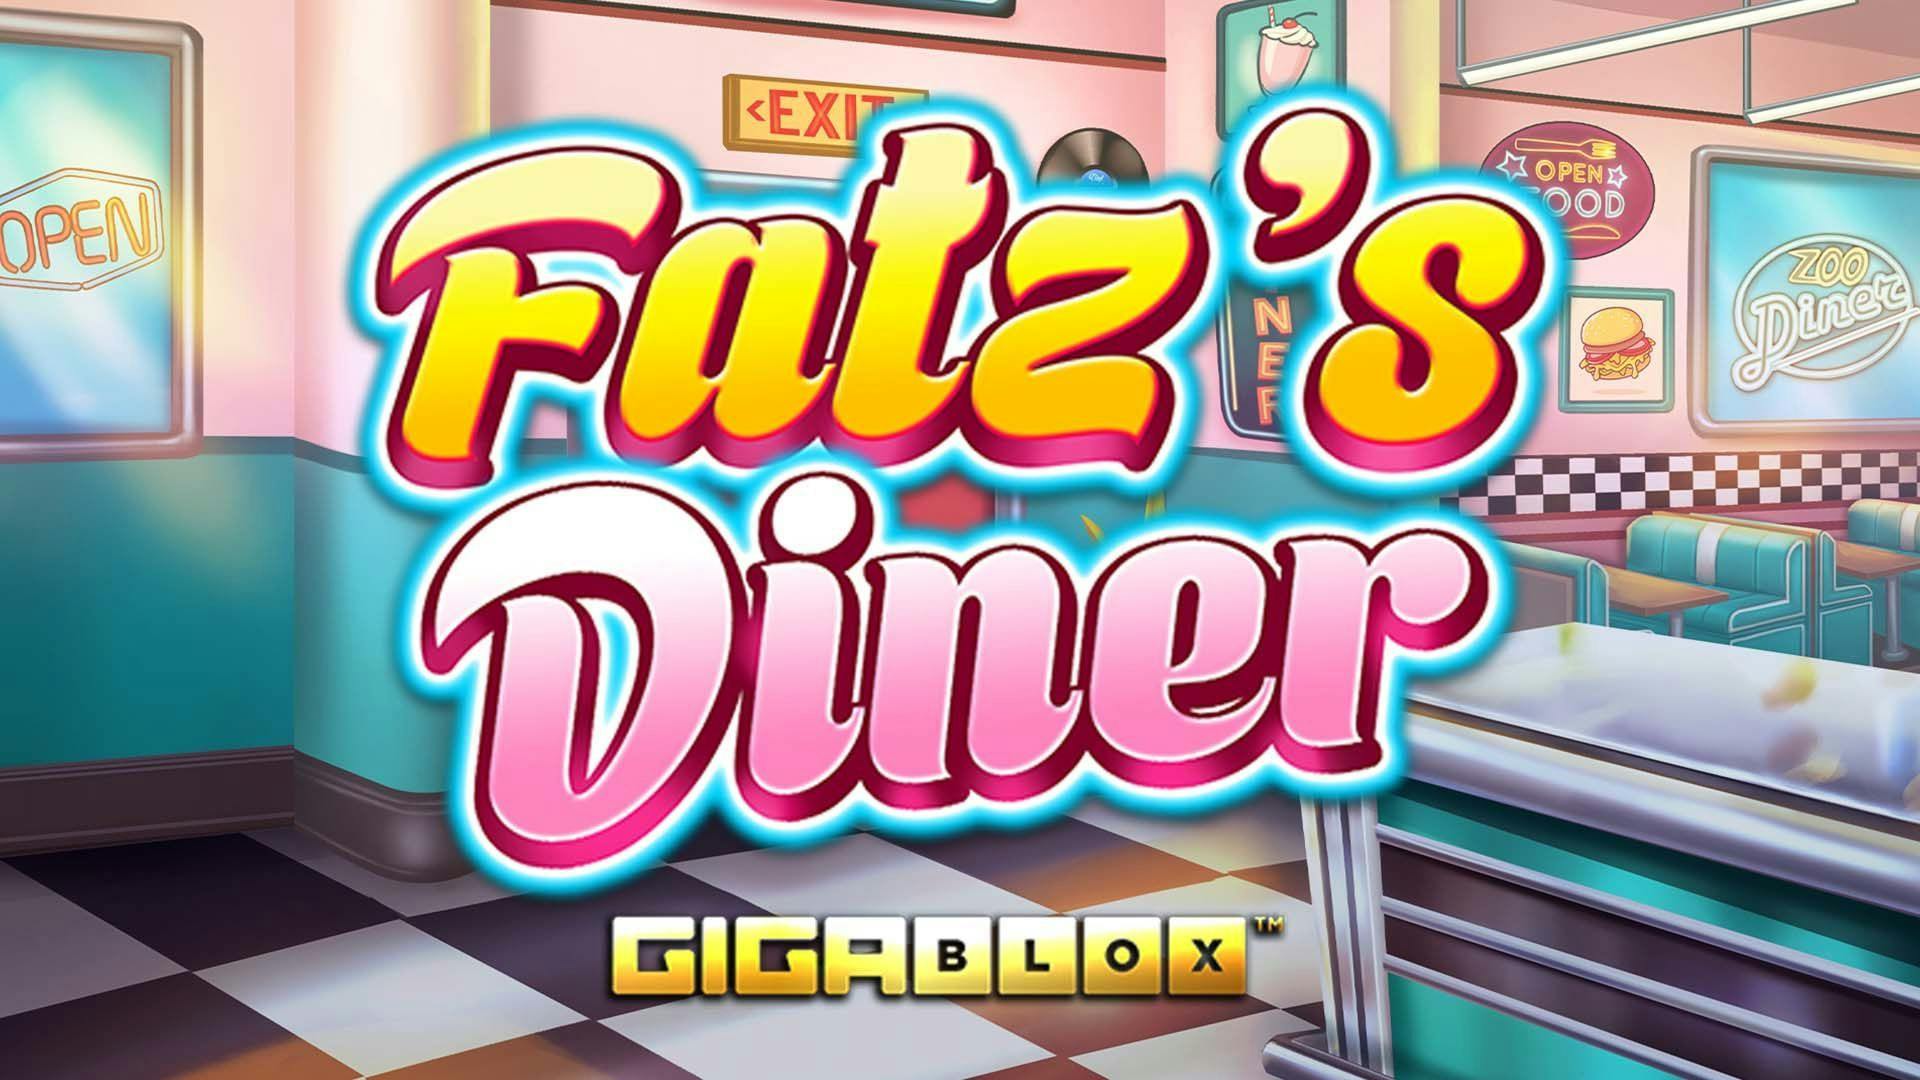 Fatz's Diner GigaBlox Slot Machine Online Free Game Play